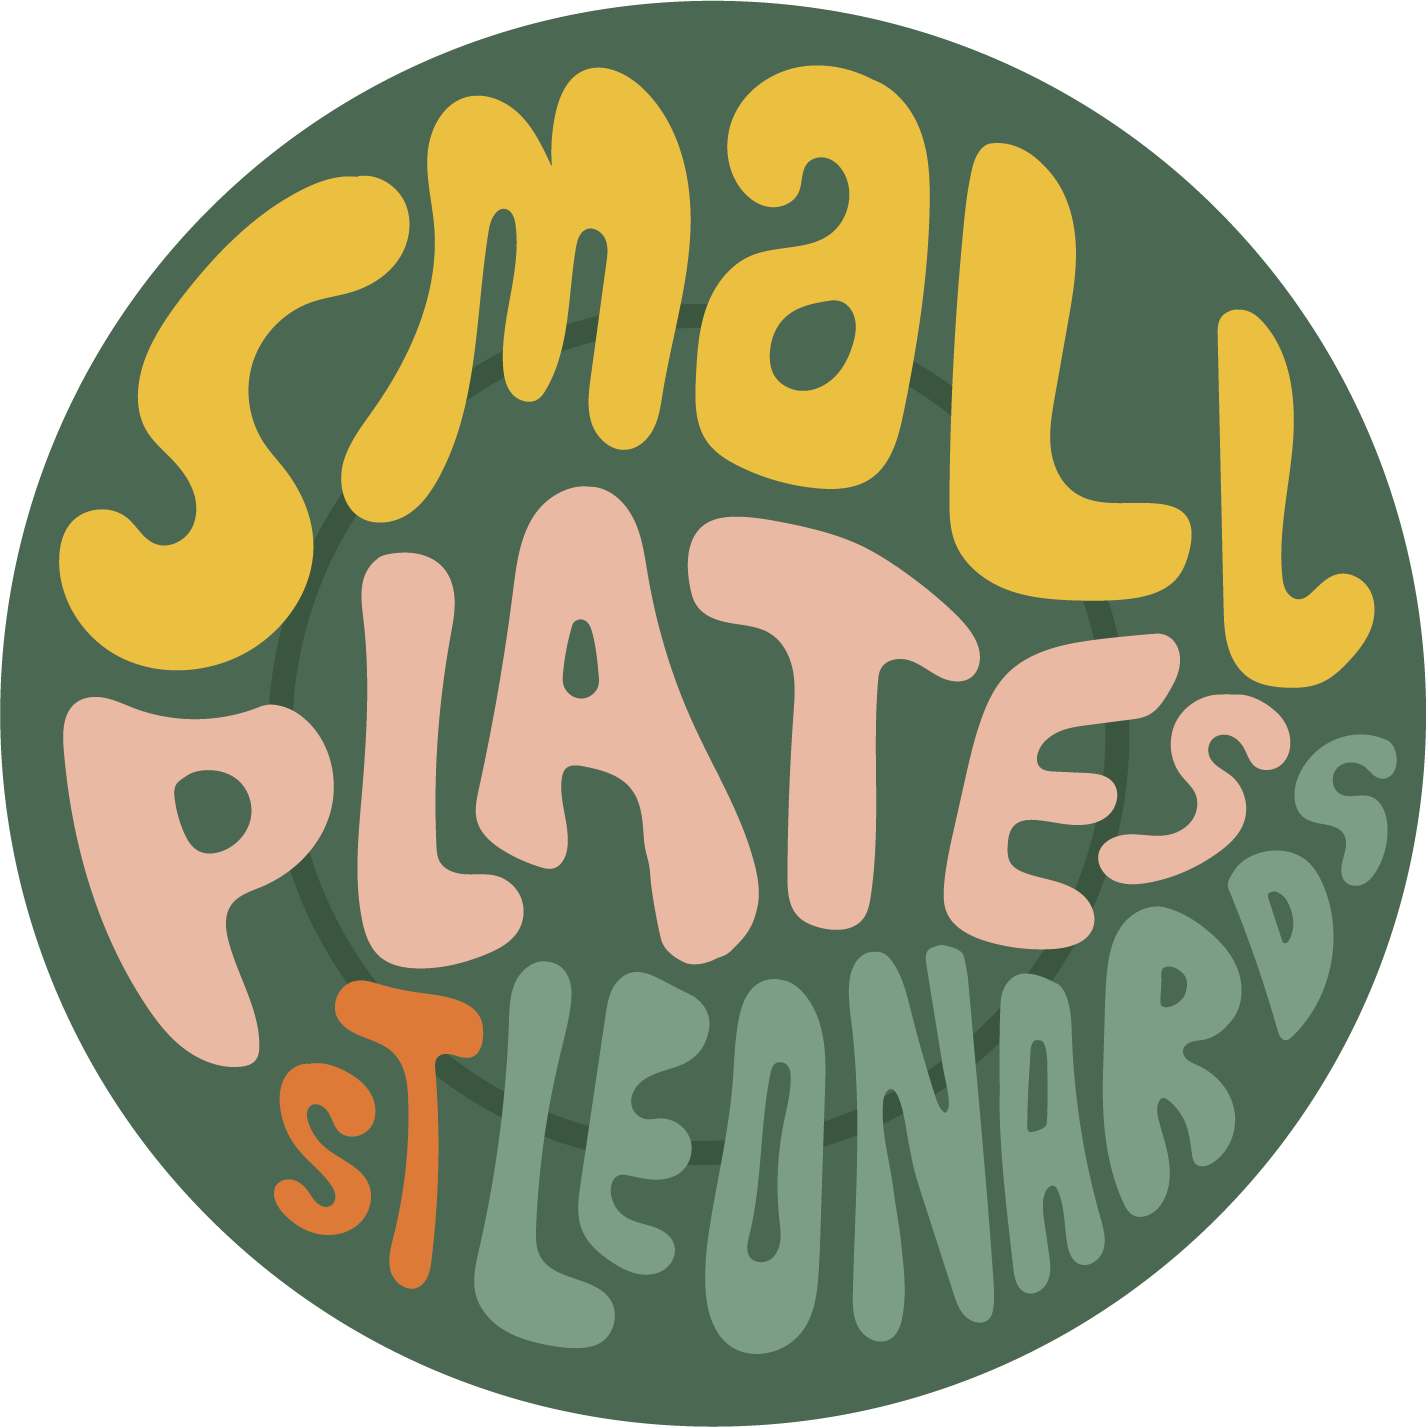 Small Plates St Leonards